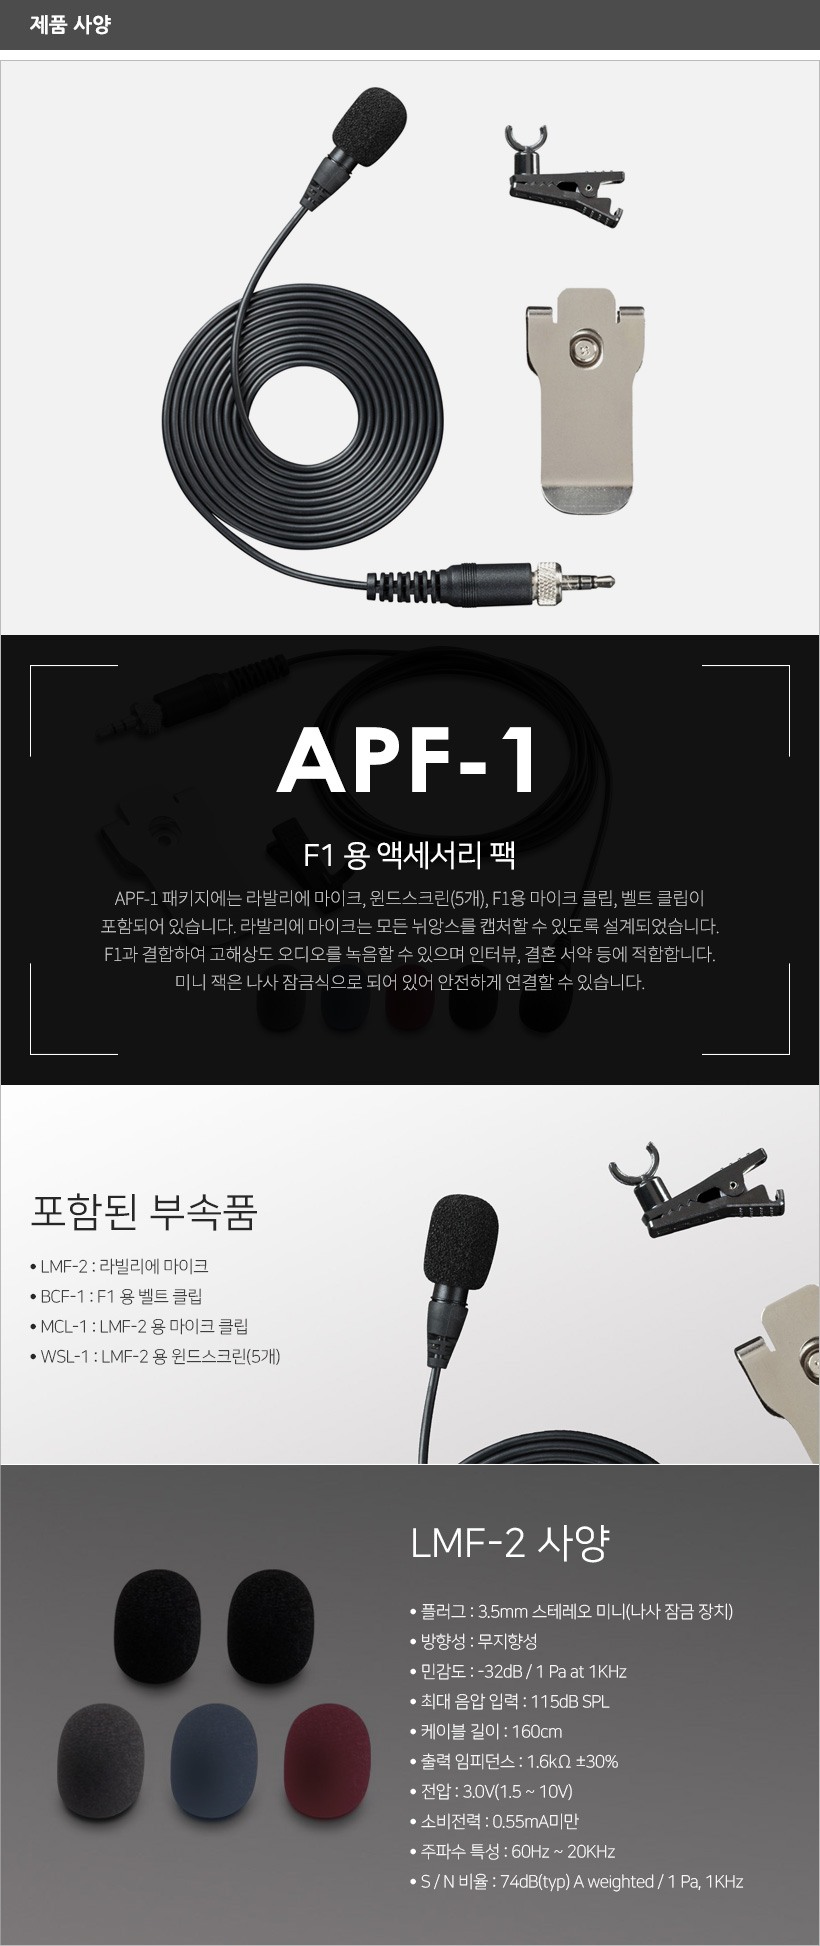 APF-1 제품사양